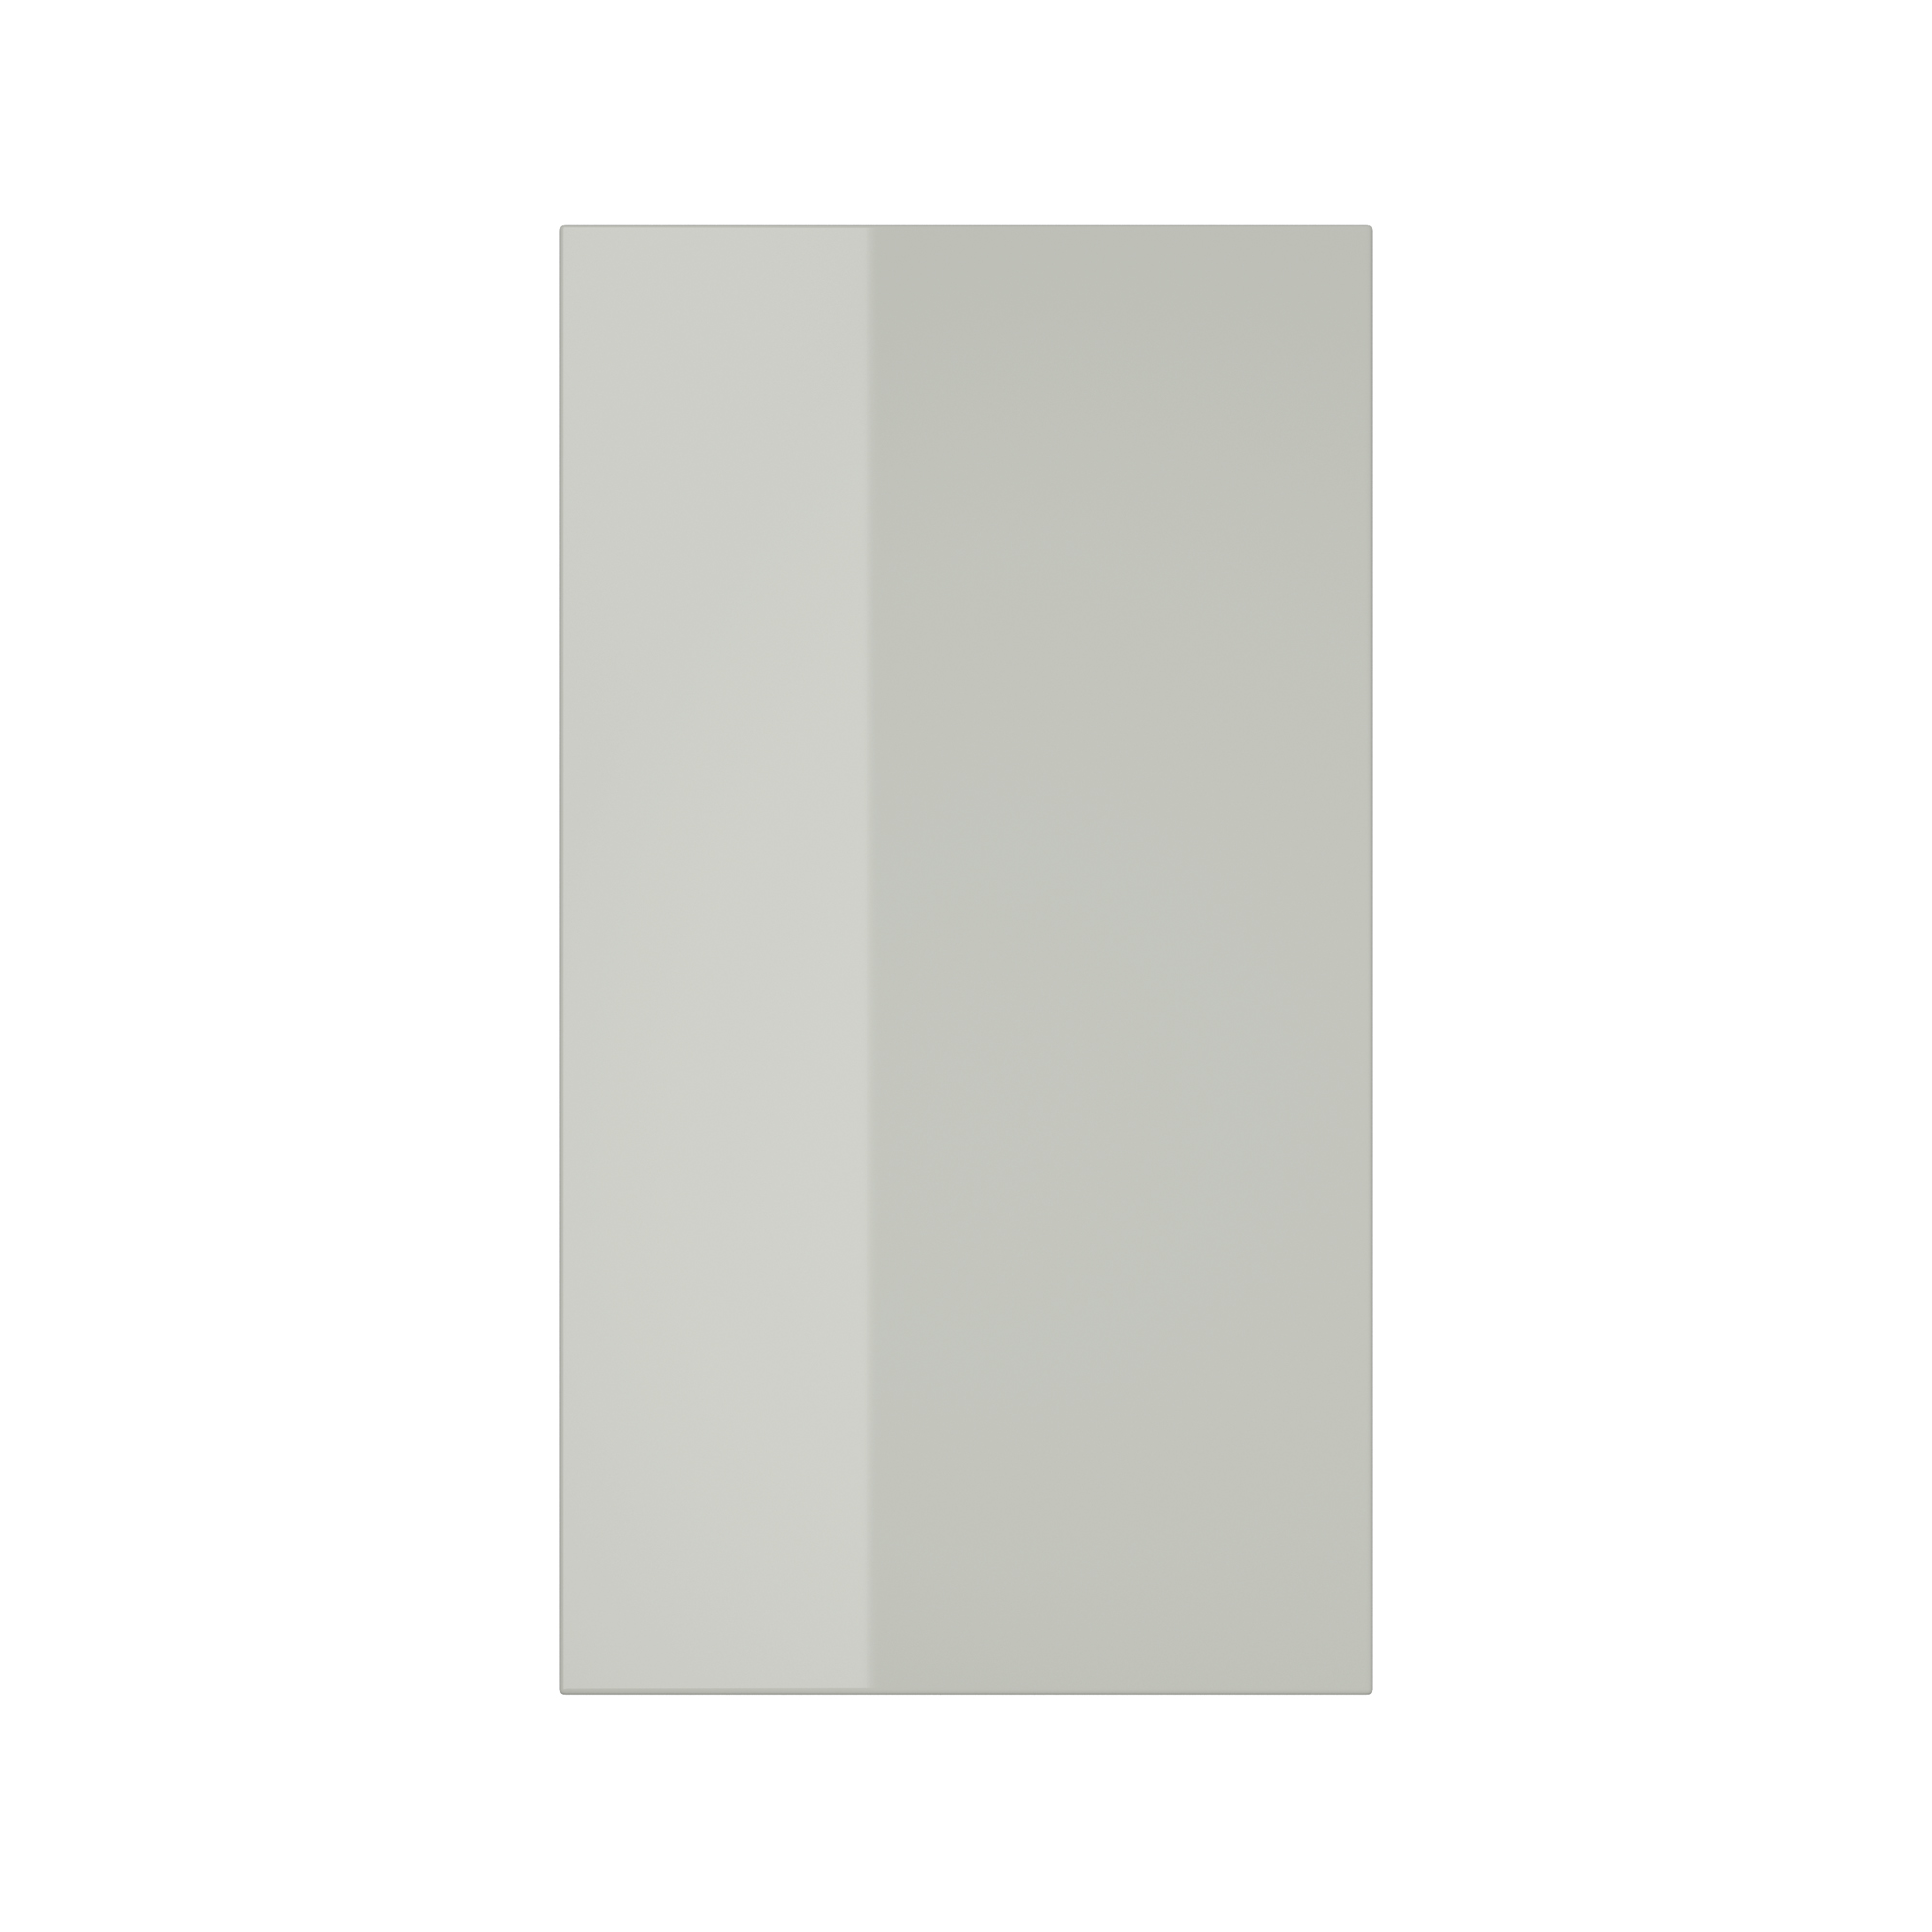 490 x 597 Zola Gloss Light Grey